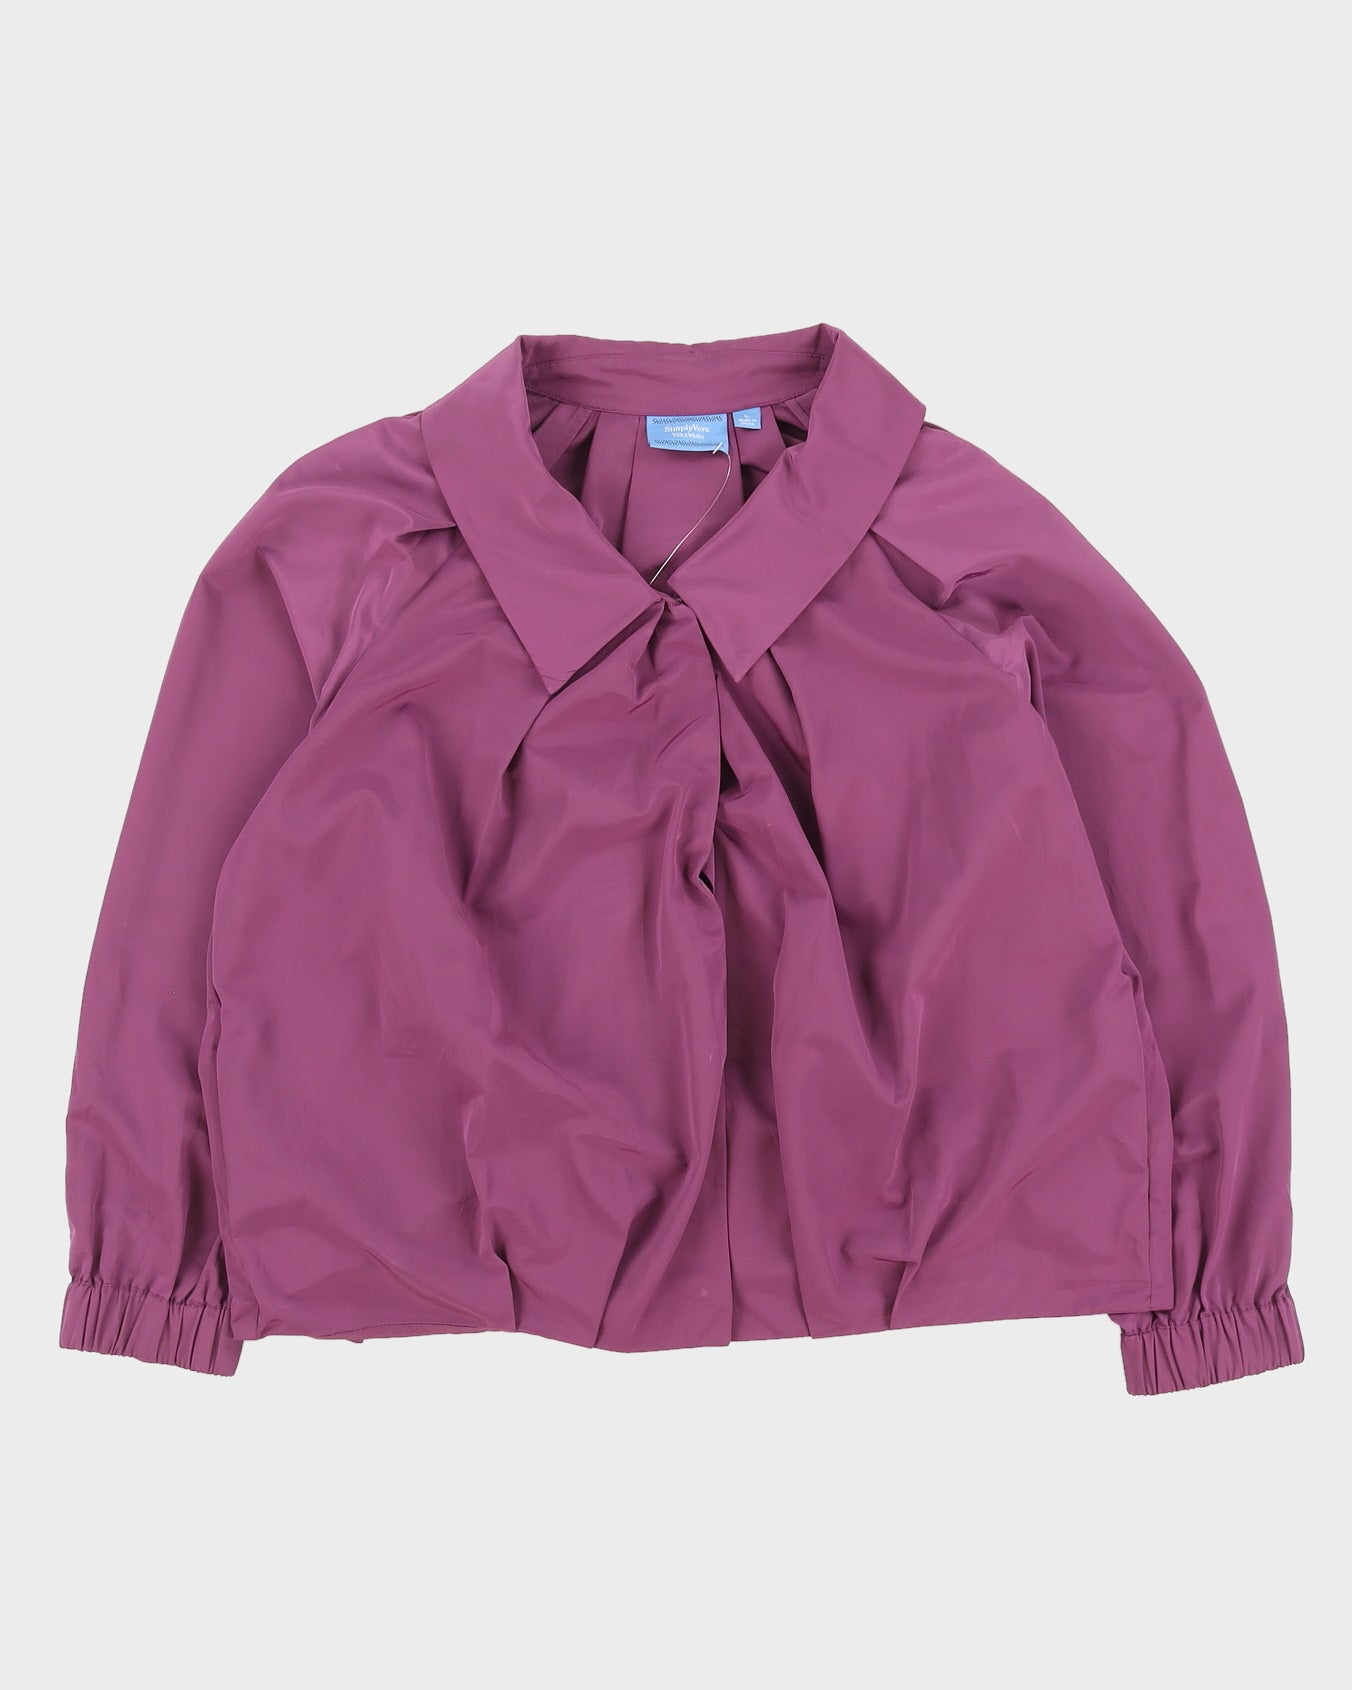 Simply Vera Wang Purple Jacket - L